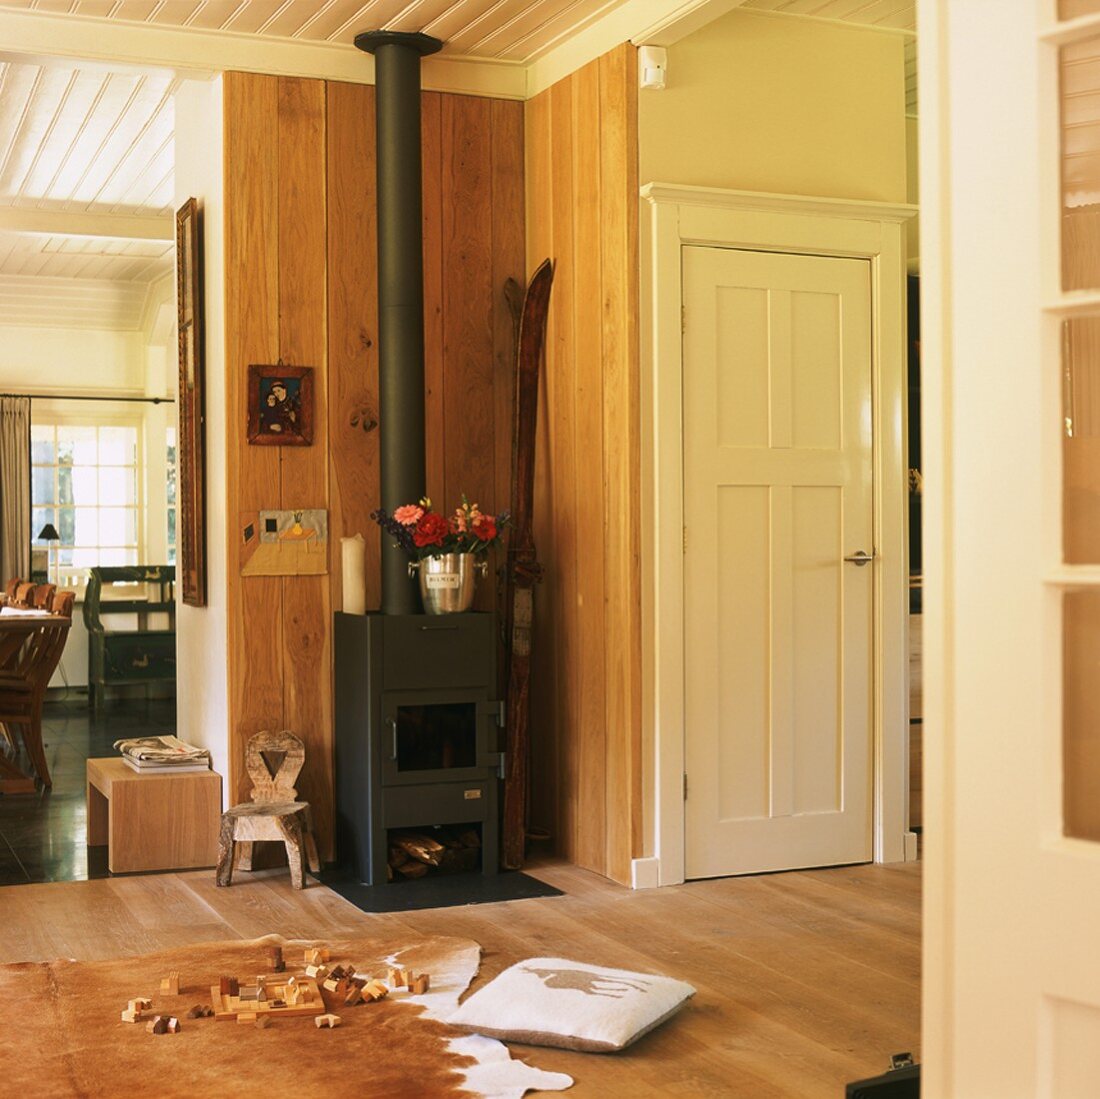 Wood-clad interior with wood-burner in corner and animal-skin rug